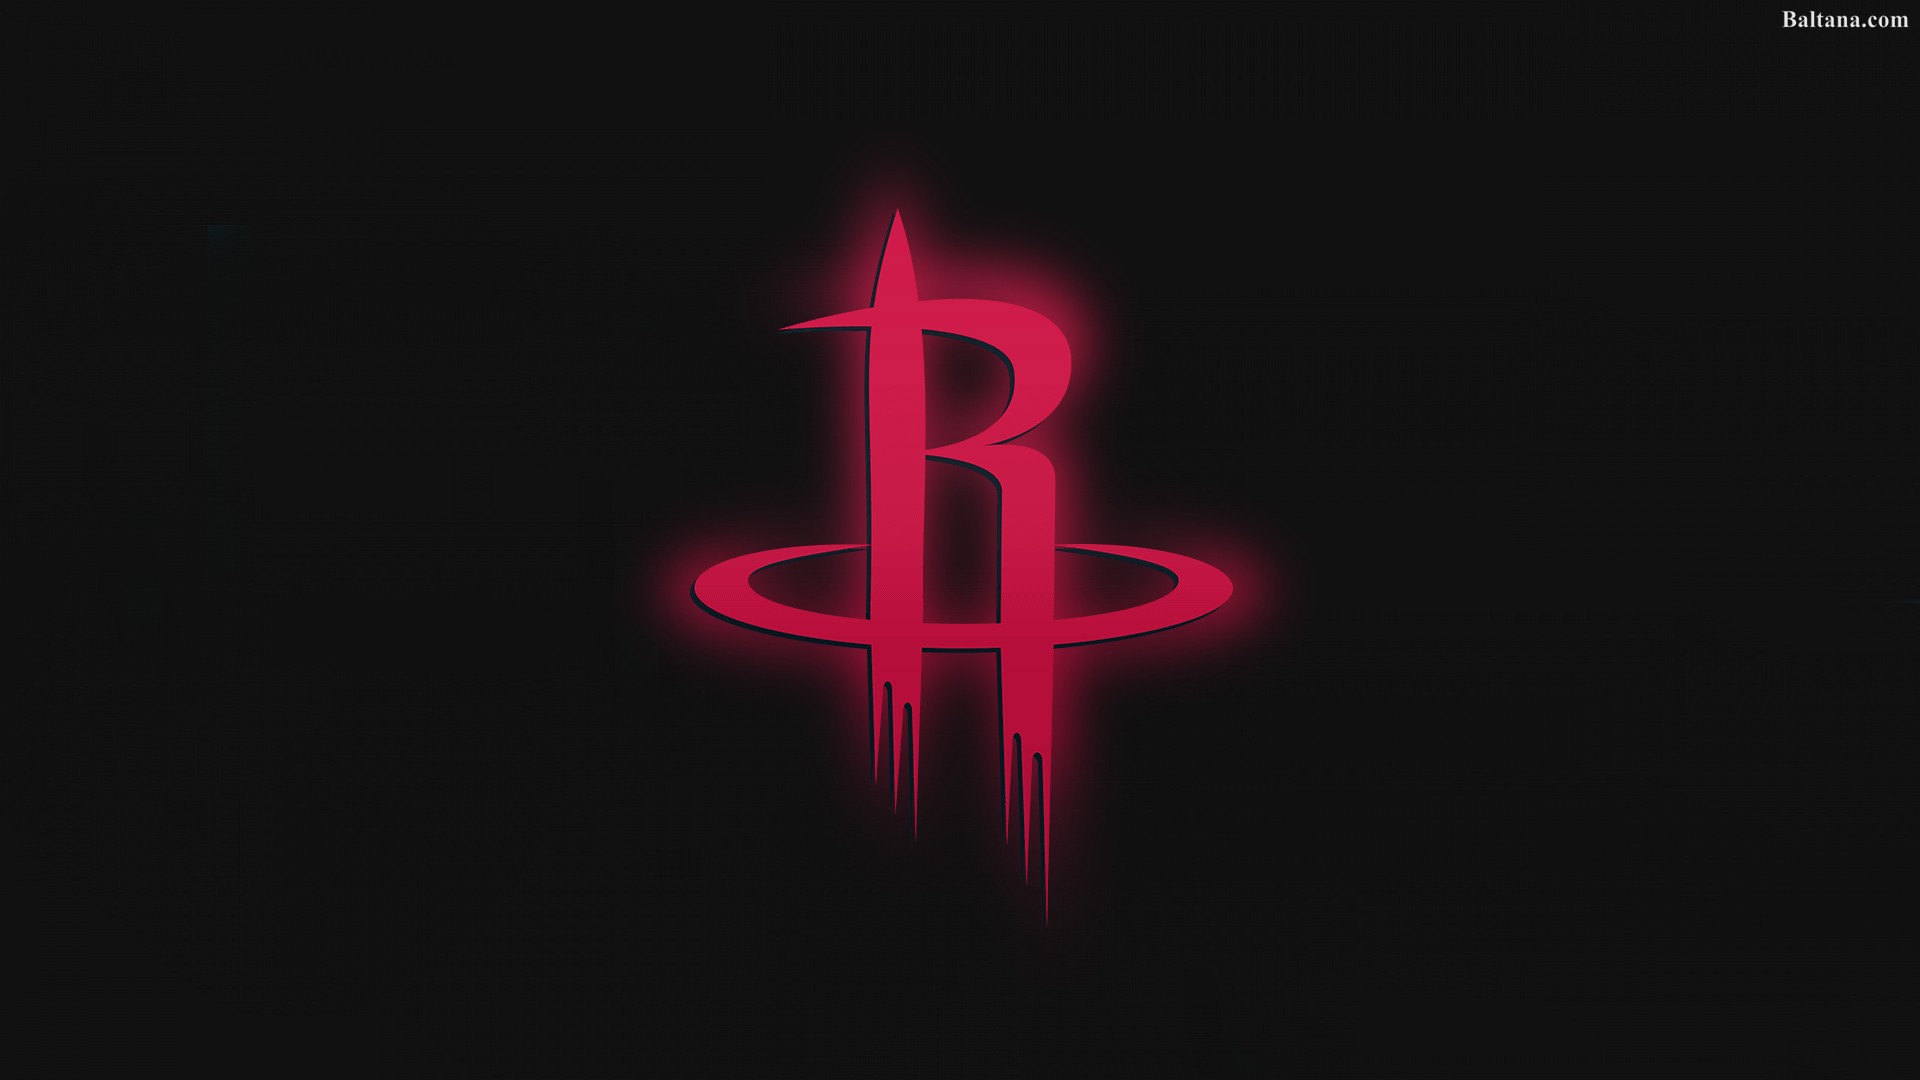 Houston Rockets High Definition Wallpaper Baltana